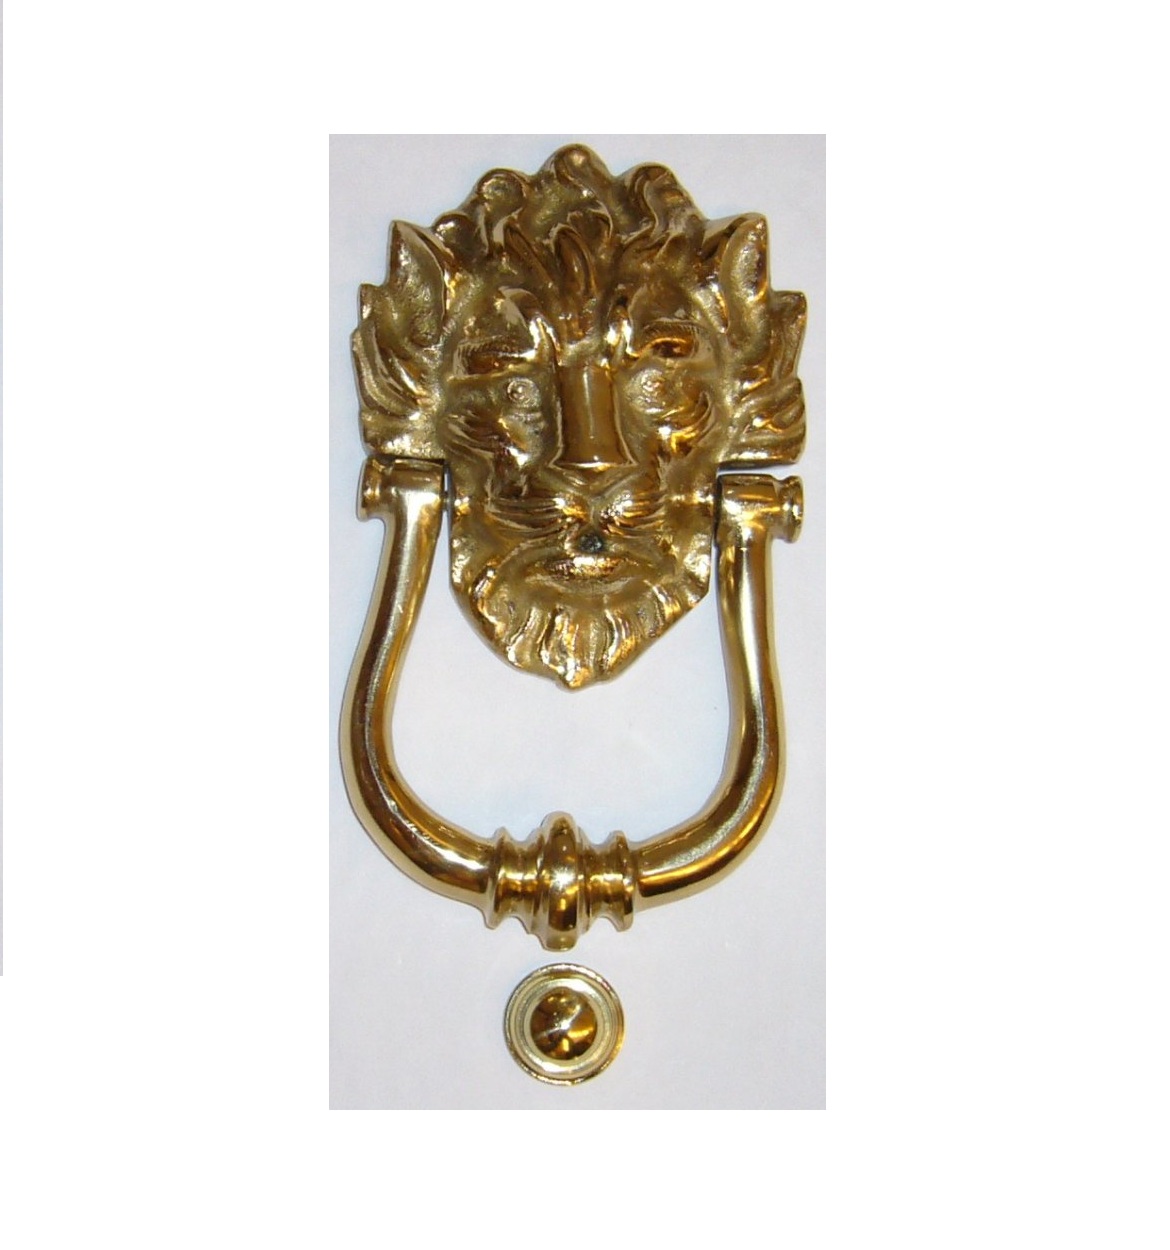 battiporta artigianale con leone in ottone - handcrafted door knocker